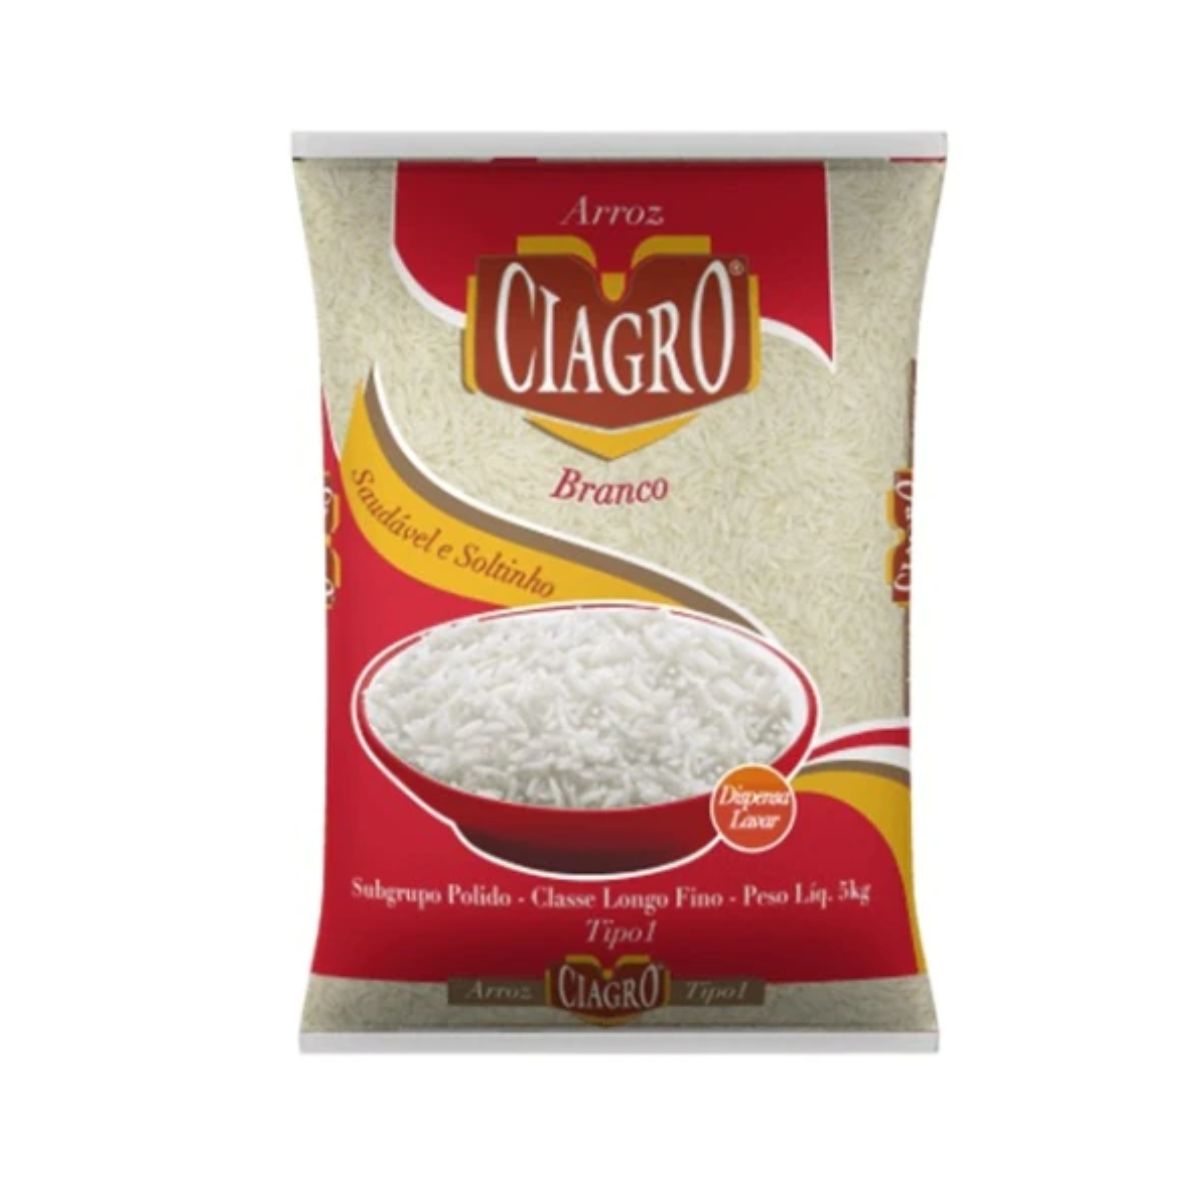 arroz-tipo-1-ciagro-5-kg-1.jpg